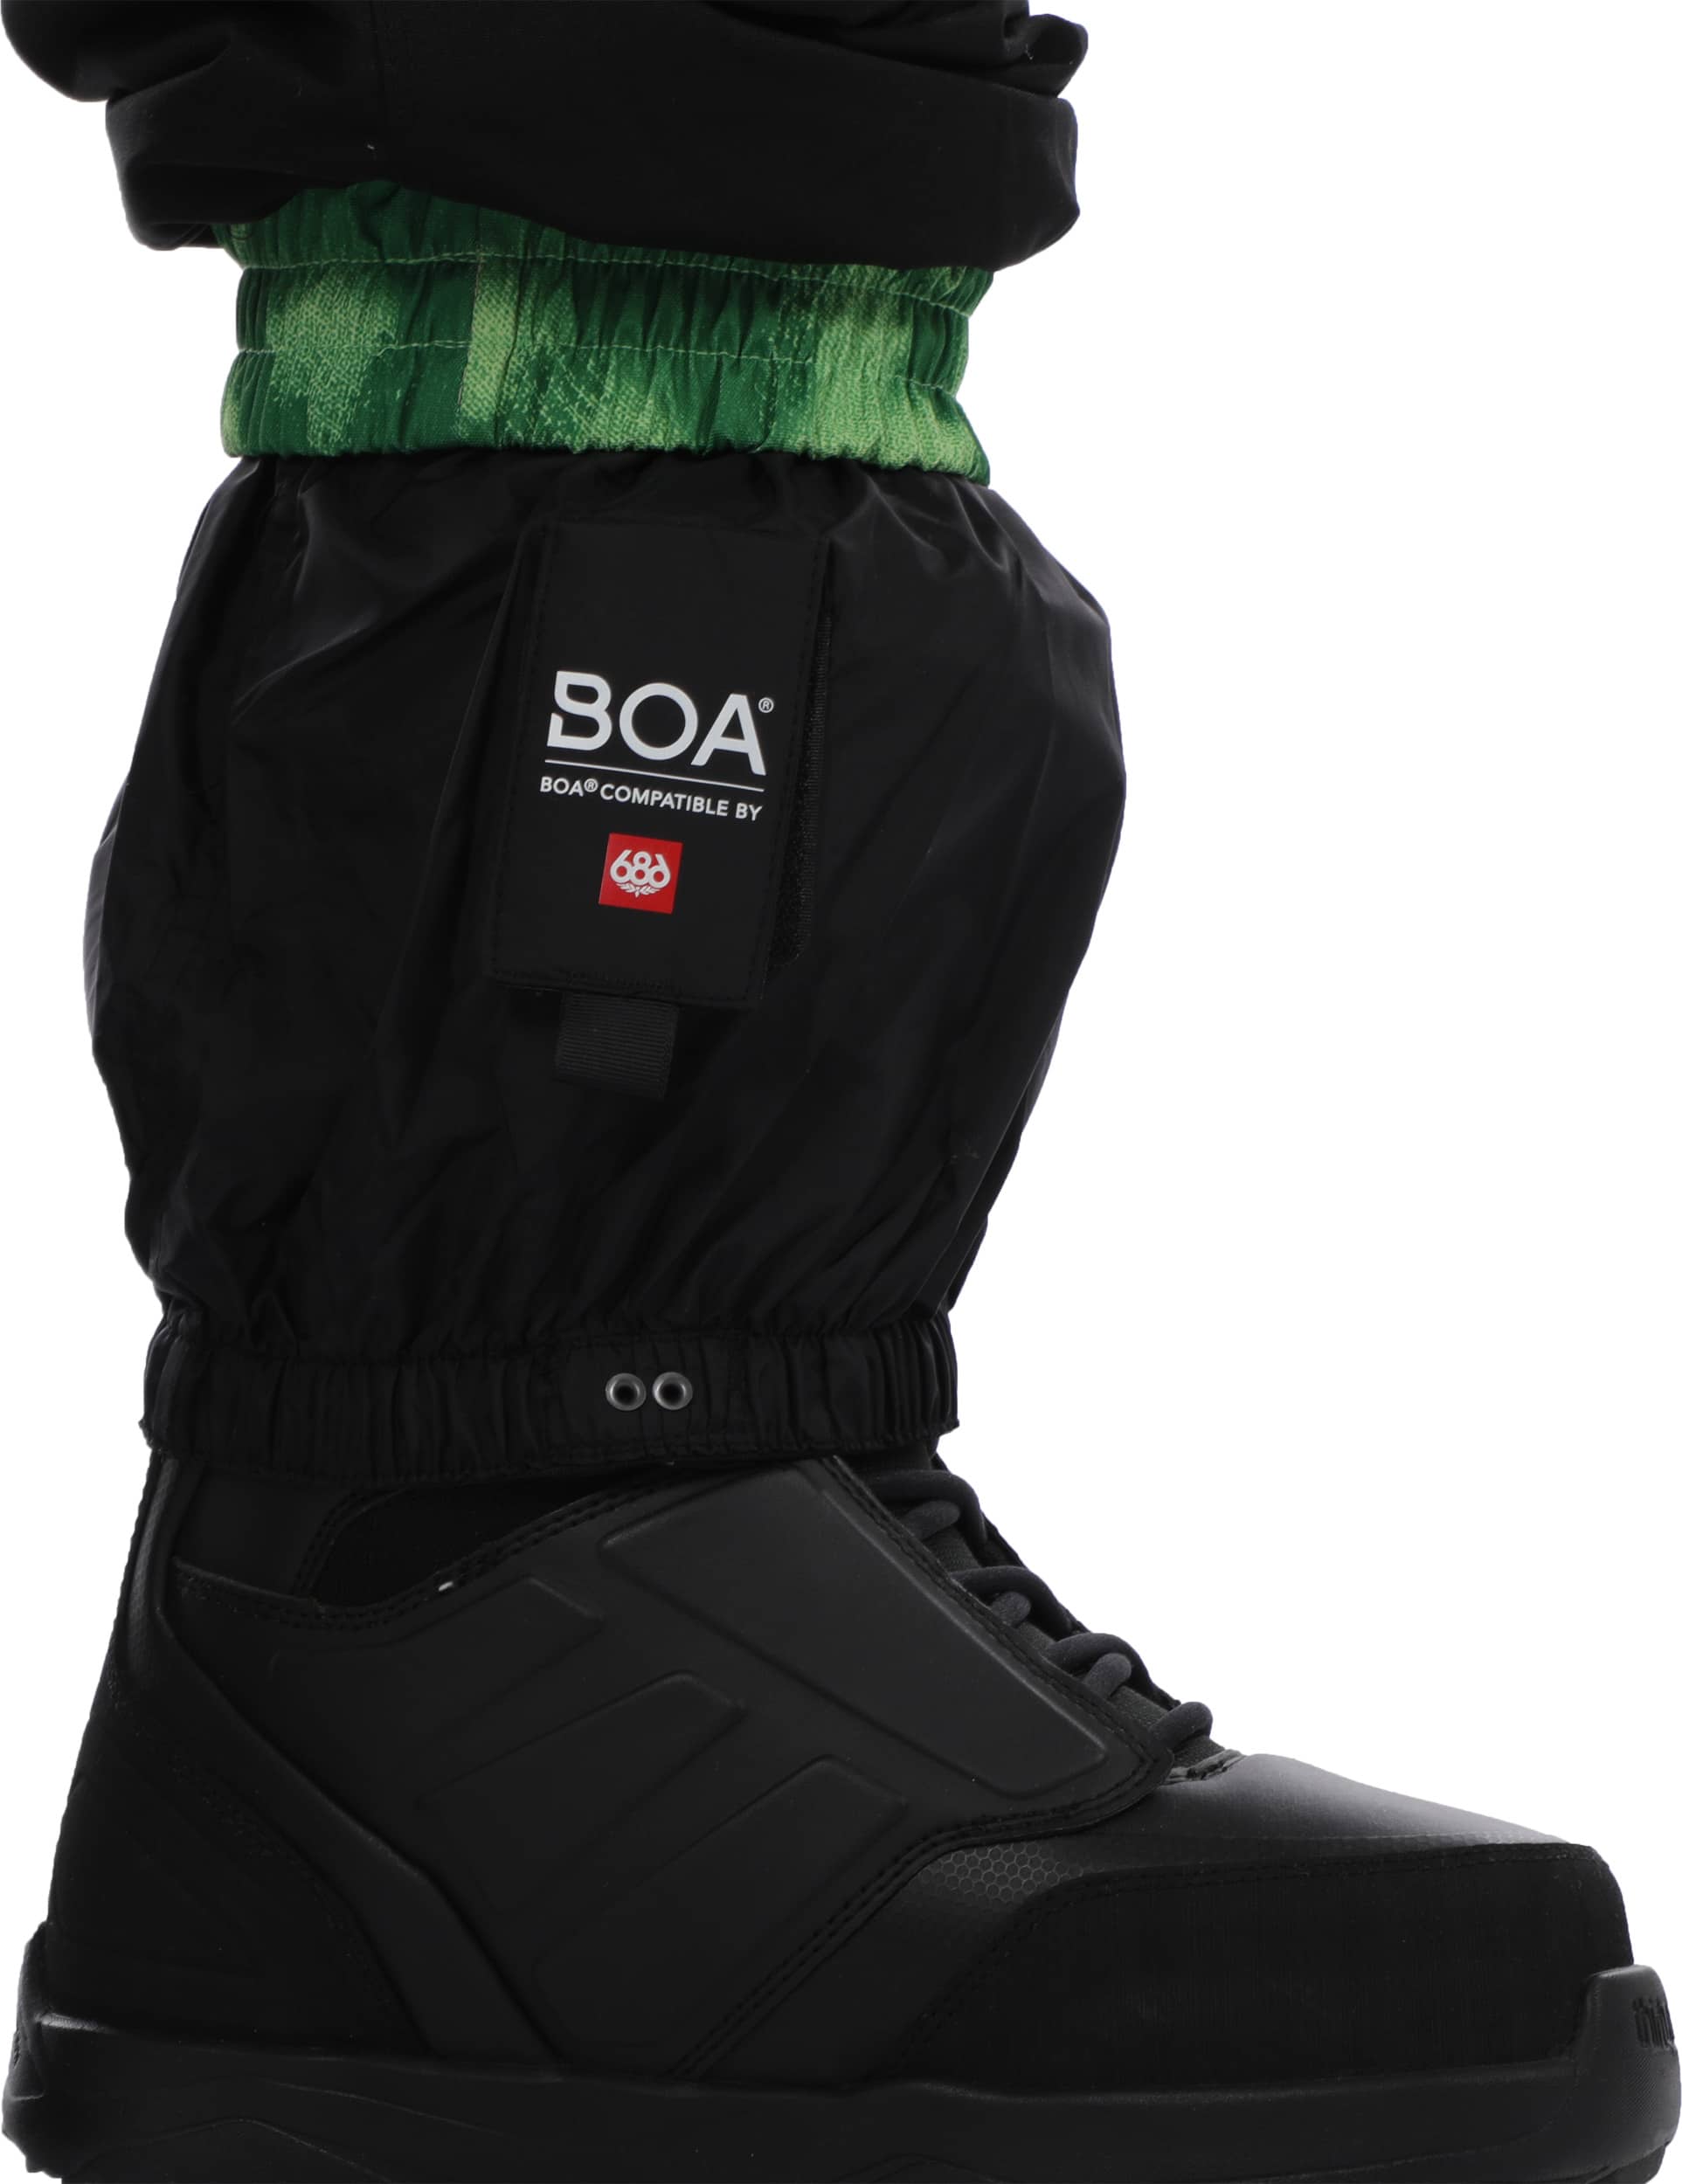 686 Forest Bailey Dojo Bib Pants - black colorblock - Free Shipping